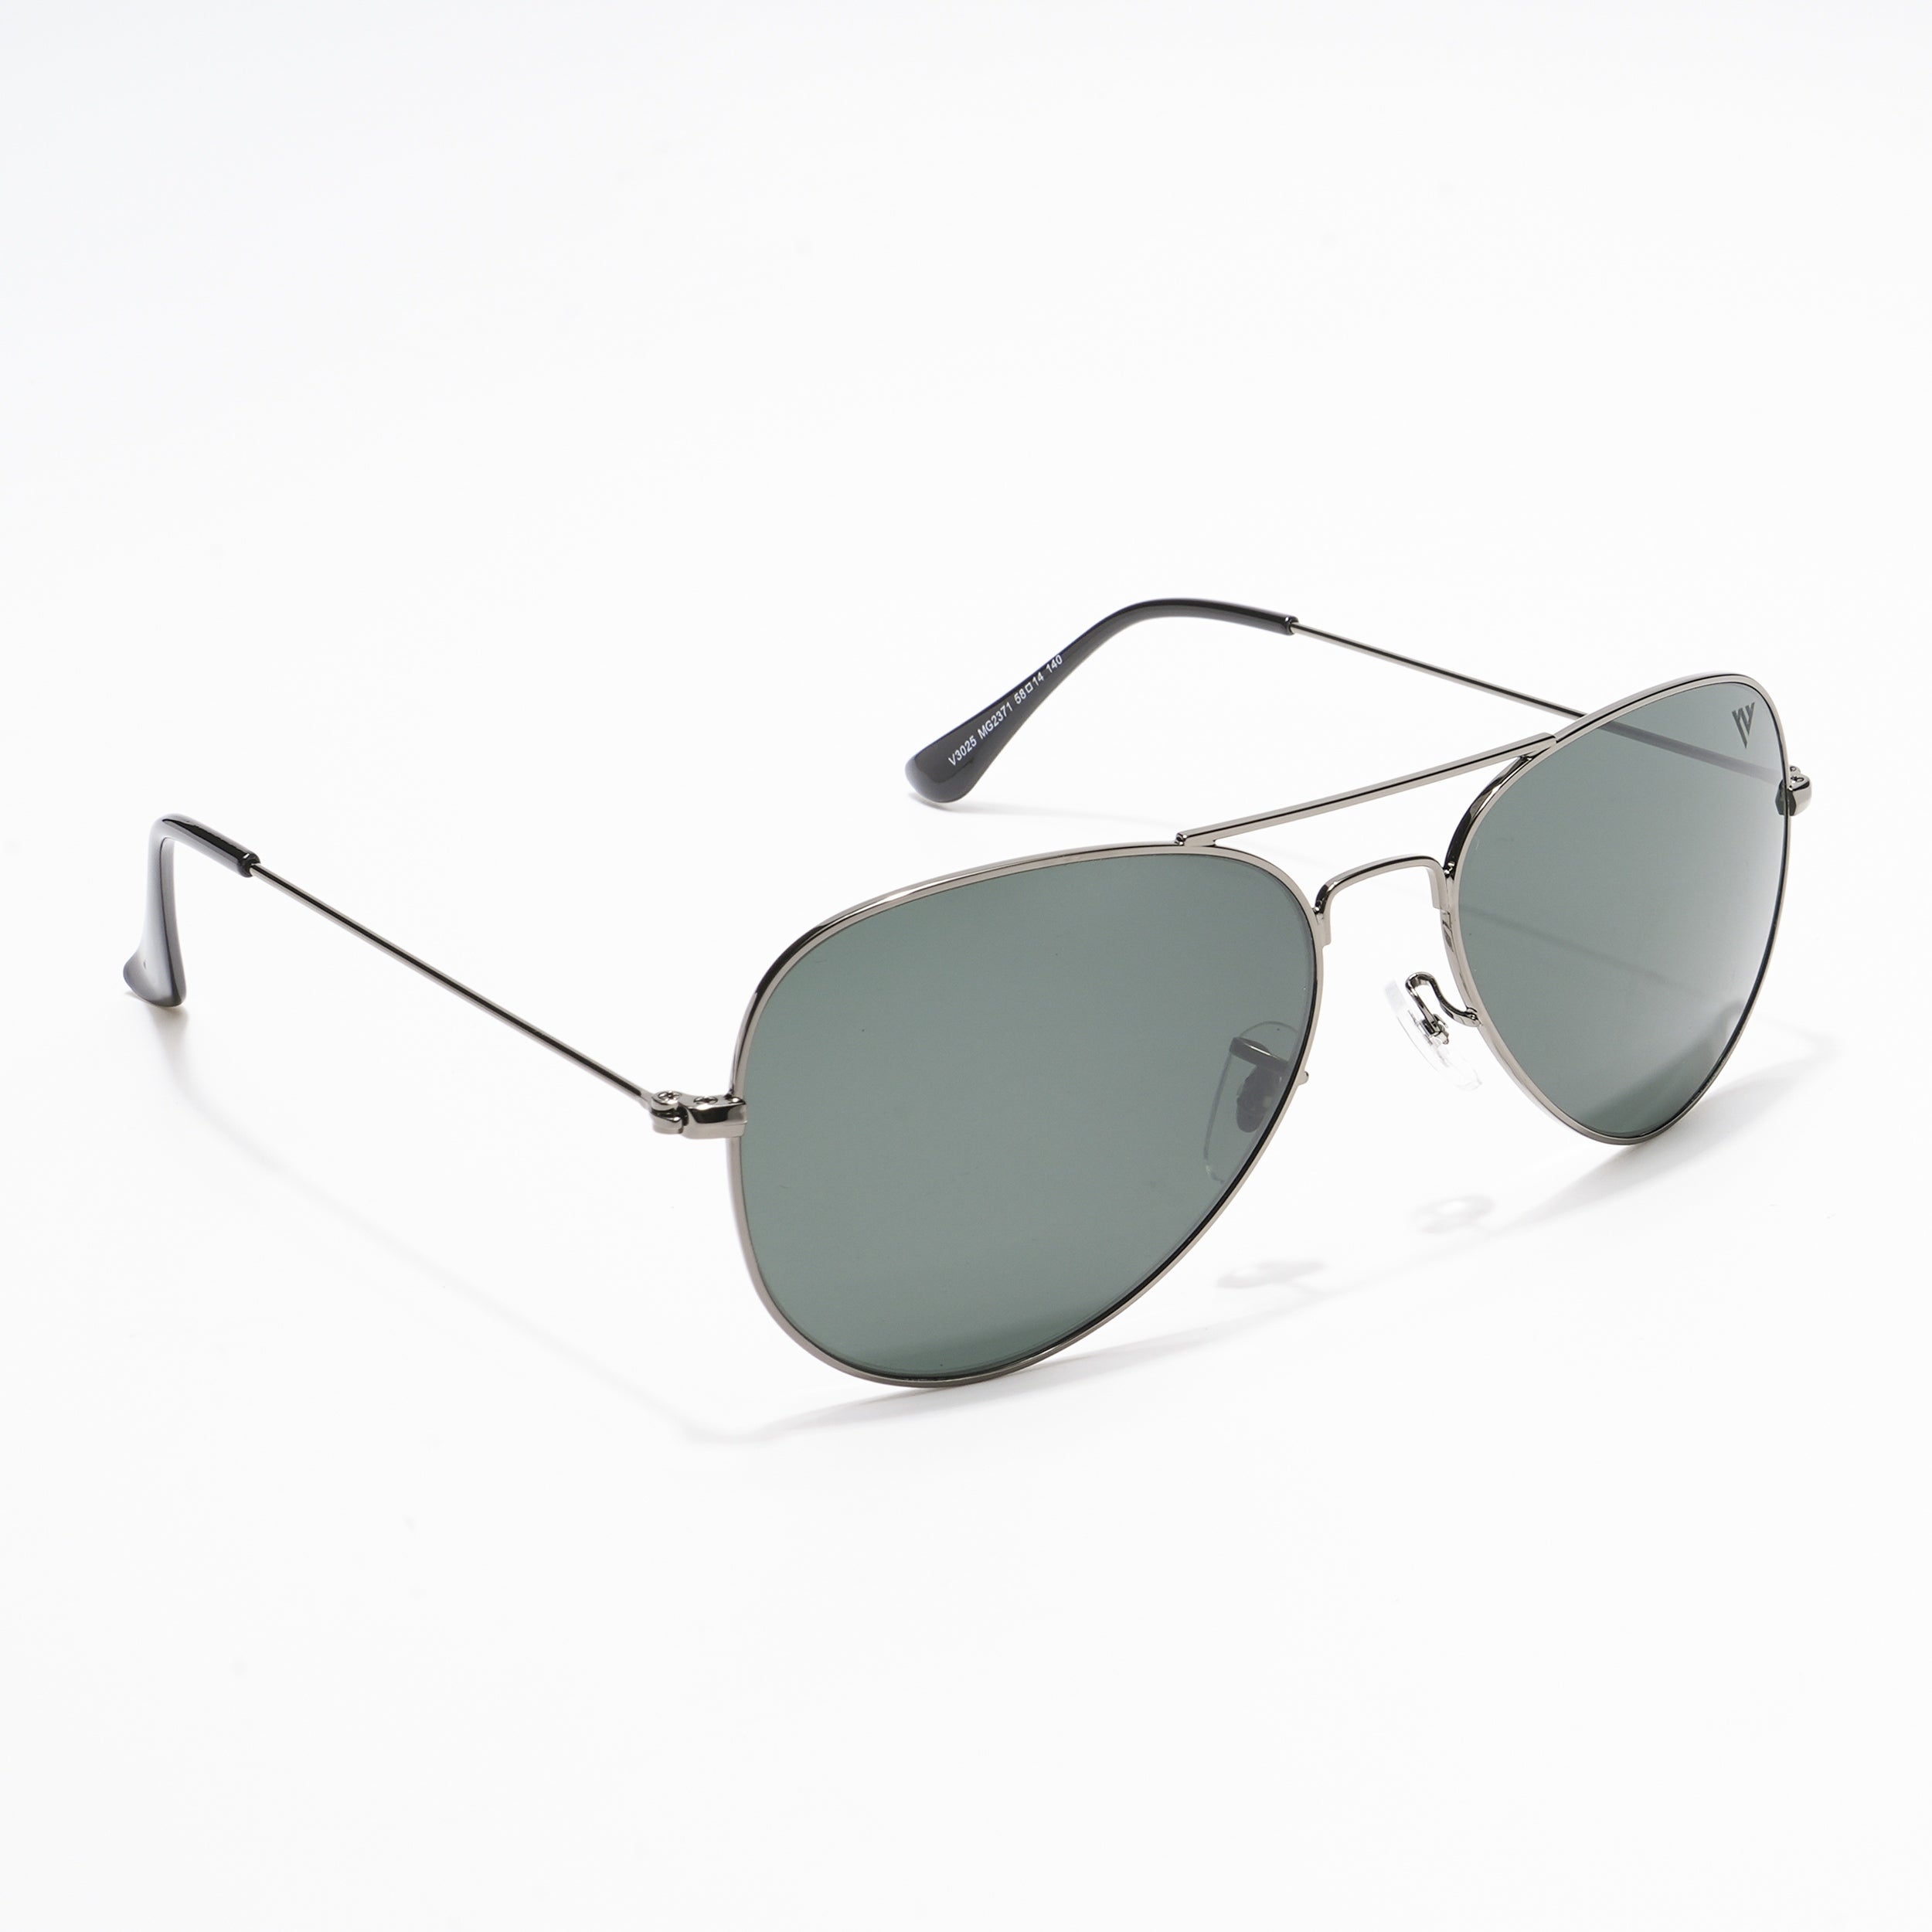 Voyage Black & Grey Aviator Sunglasses - MG2371